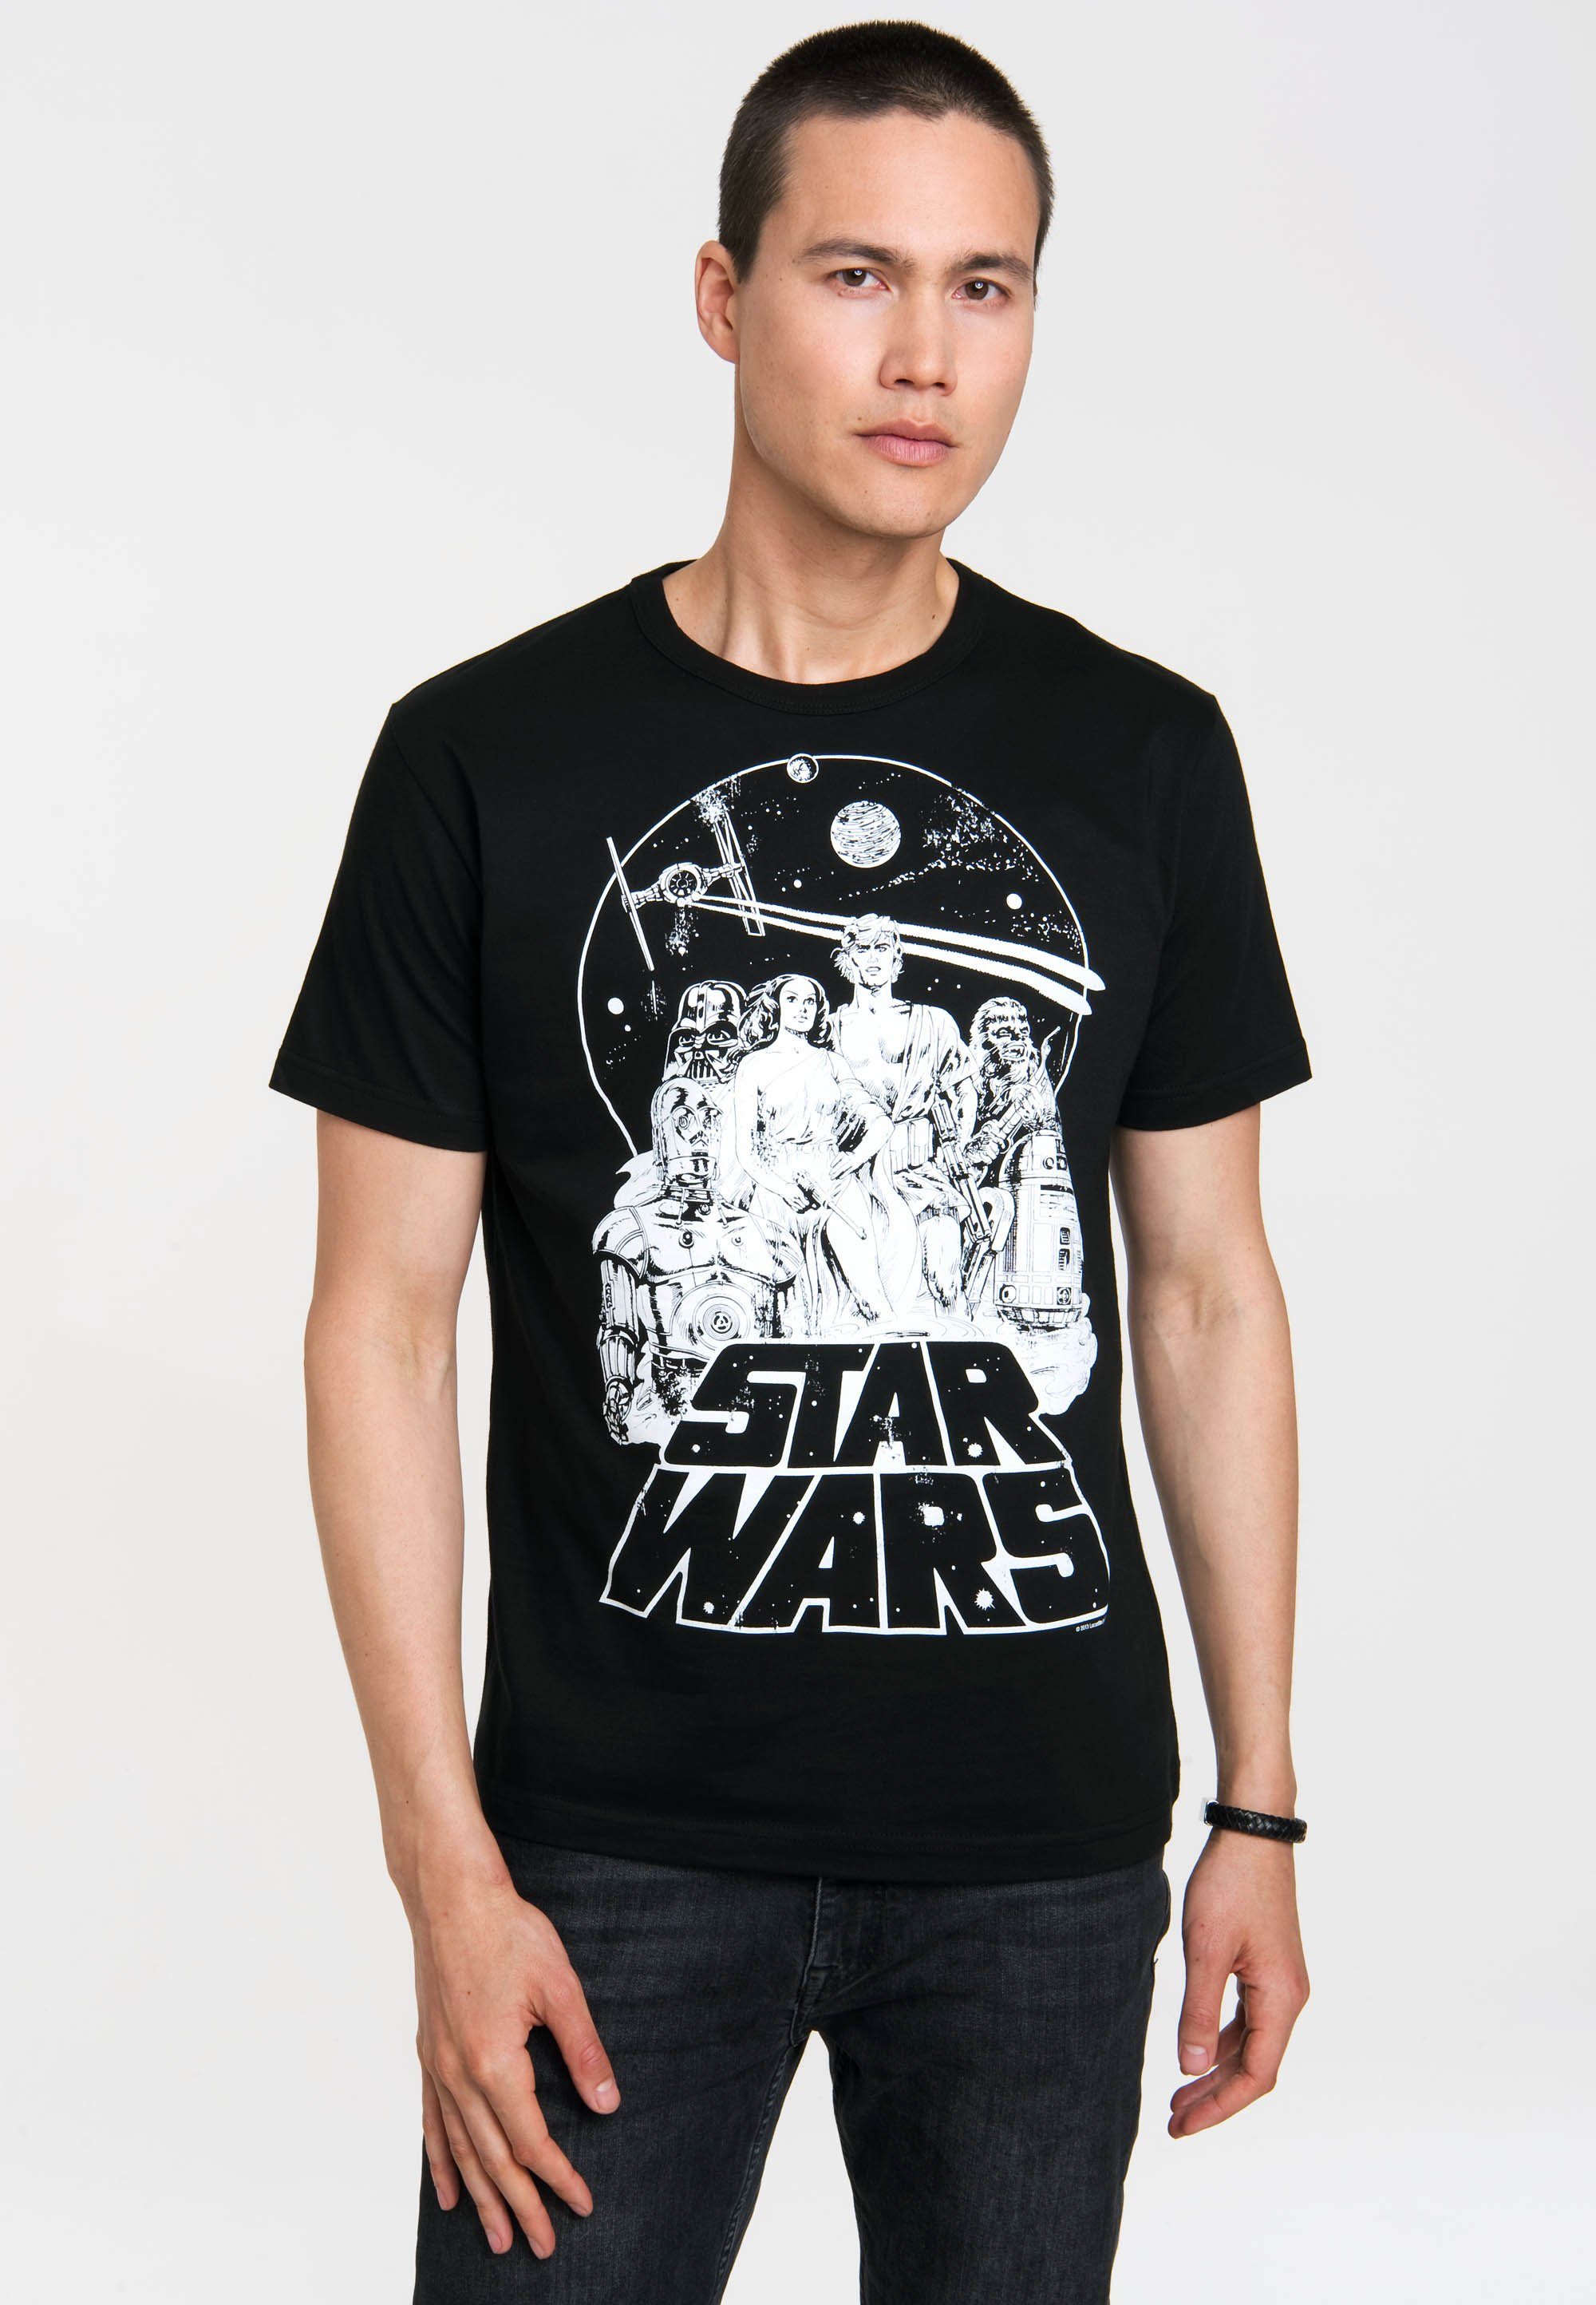 - mit T-Shirt LOGOSHIRT Sterne Krieg der Star Wars-Druck Classic coolem